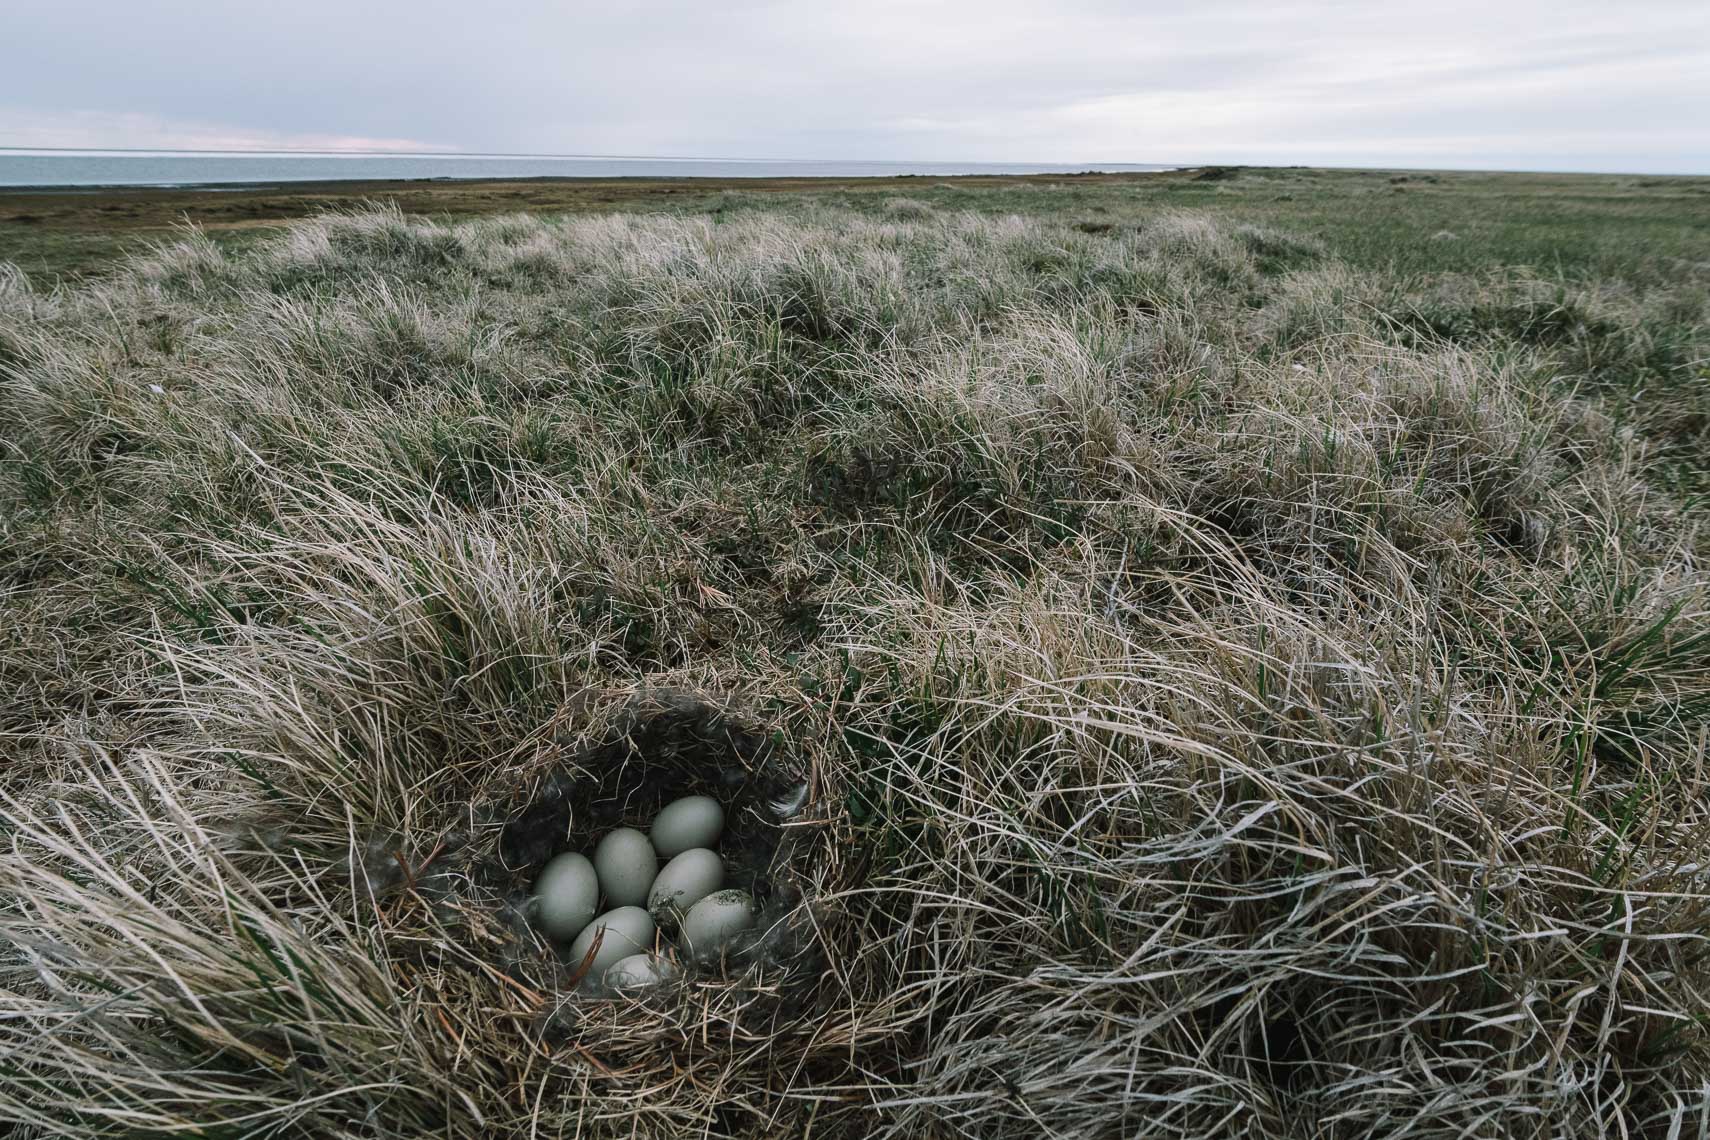 Snow Goose Nest, Tundra Camoflauge